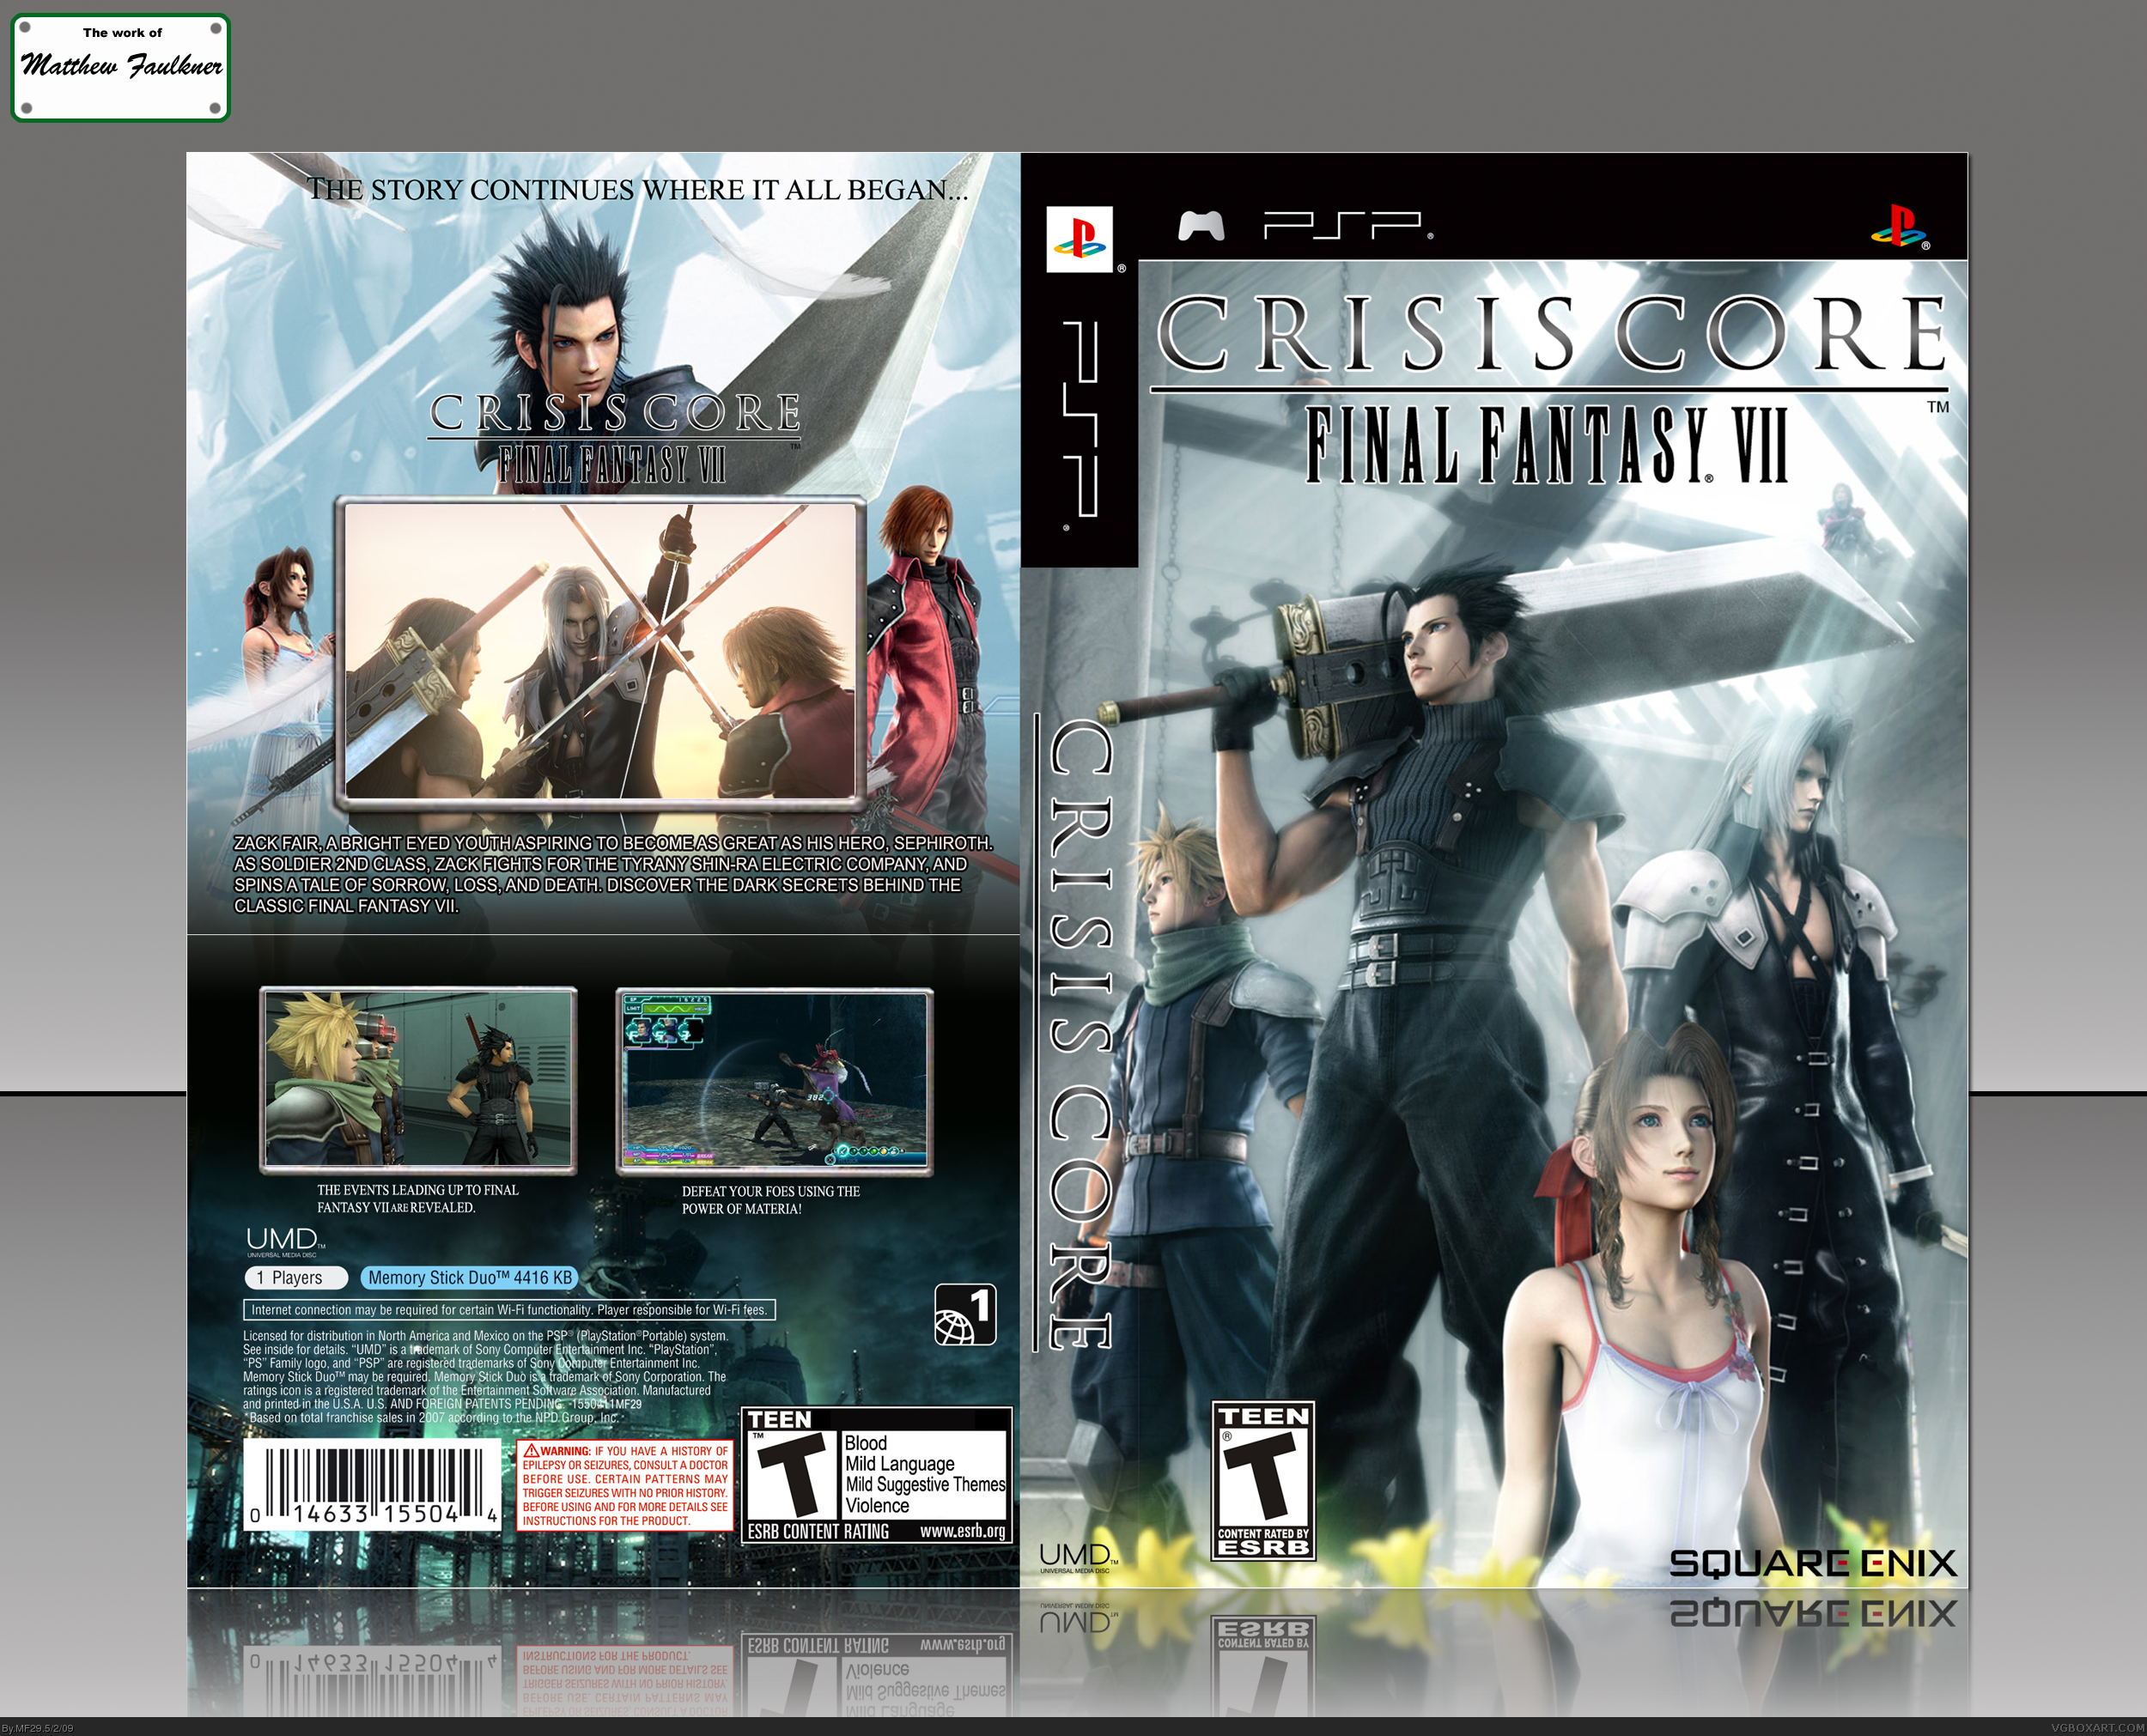 Viewing full size Crisis Core: Final Fantasy VII box cover.